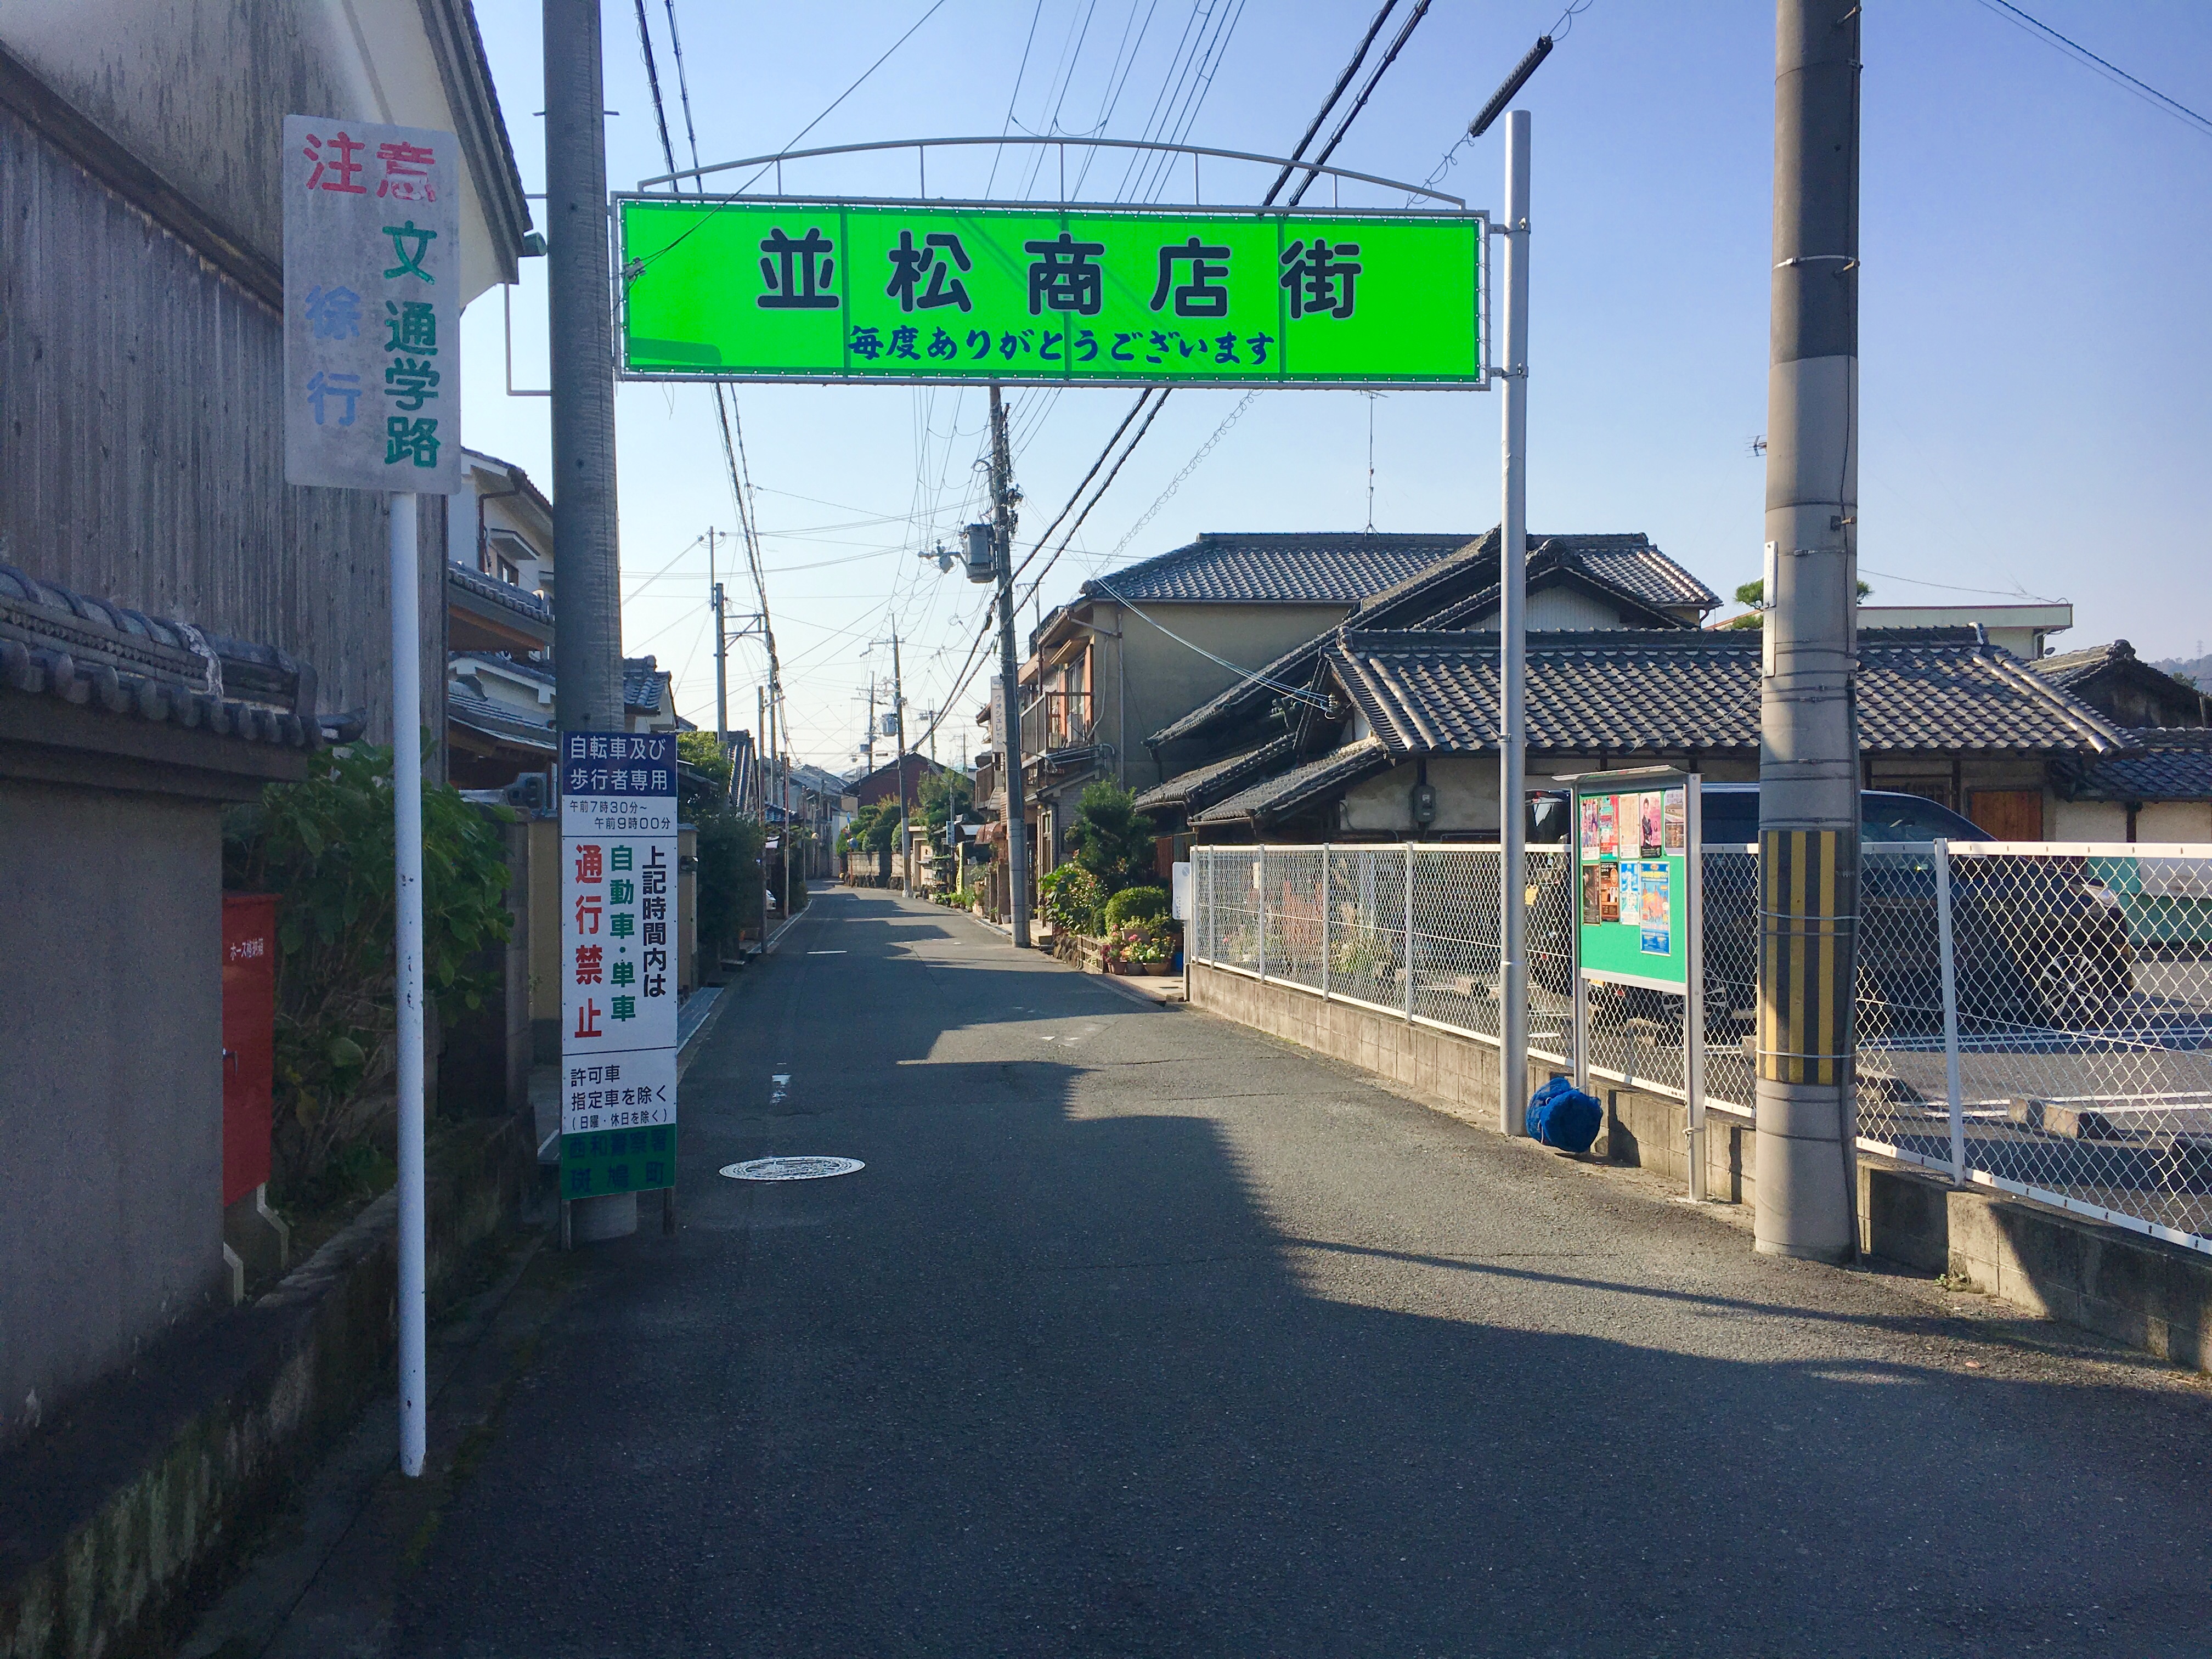 Namimatsu Shopping Street with green sign